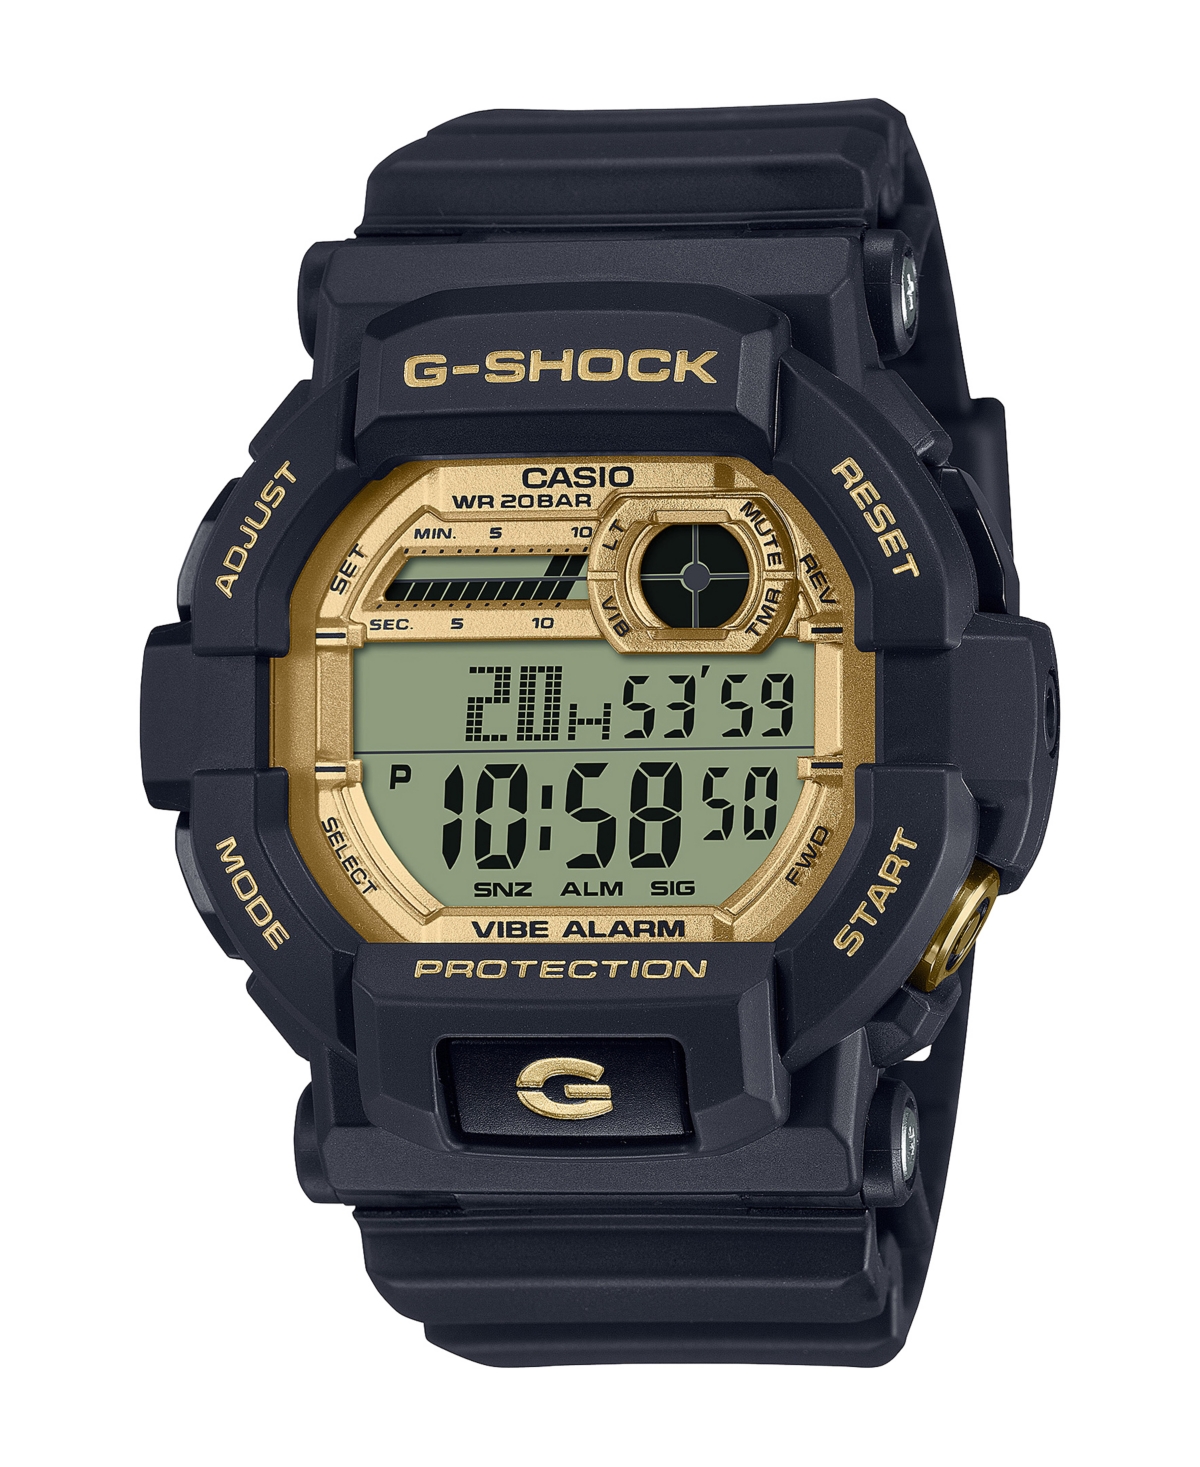 Men's Analog Digital Black Resin Watch 50.8mm, GD350GB-1 - Black